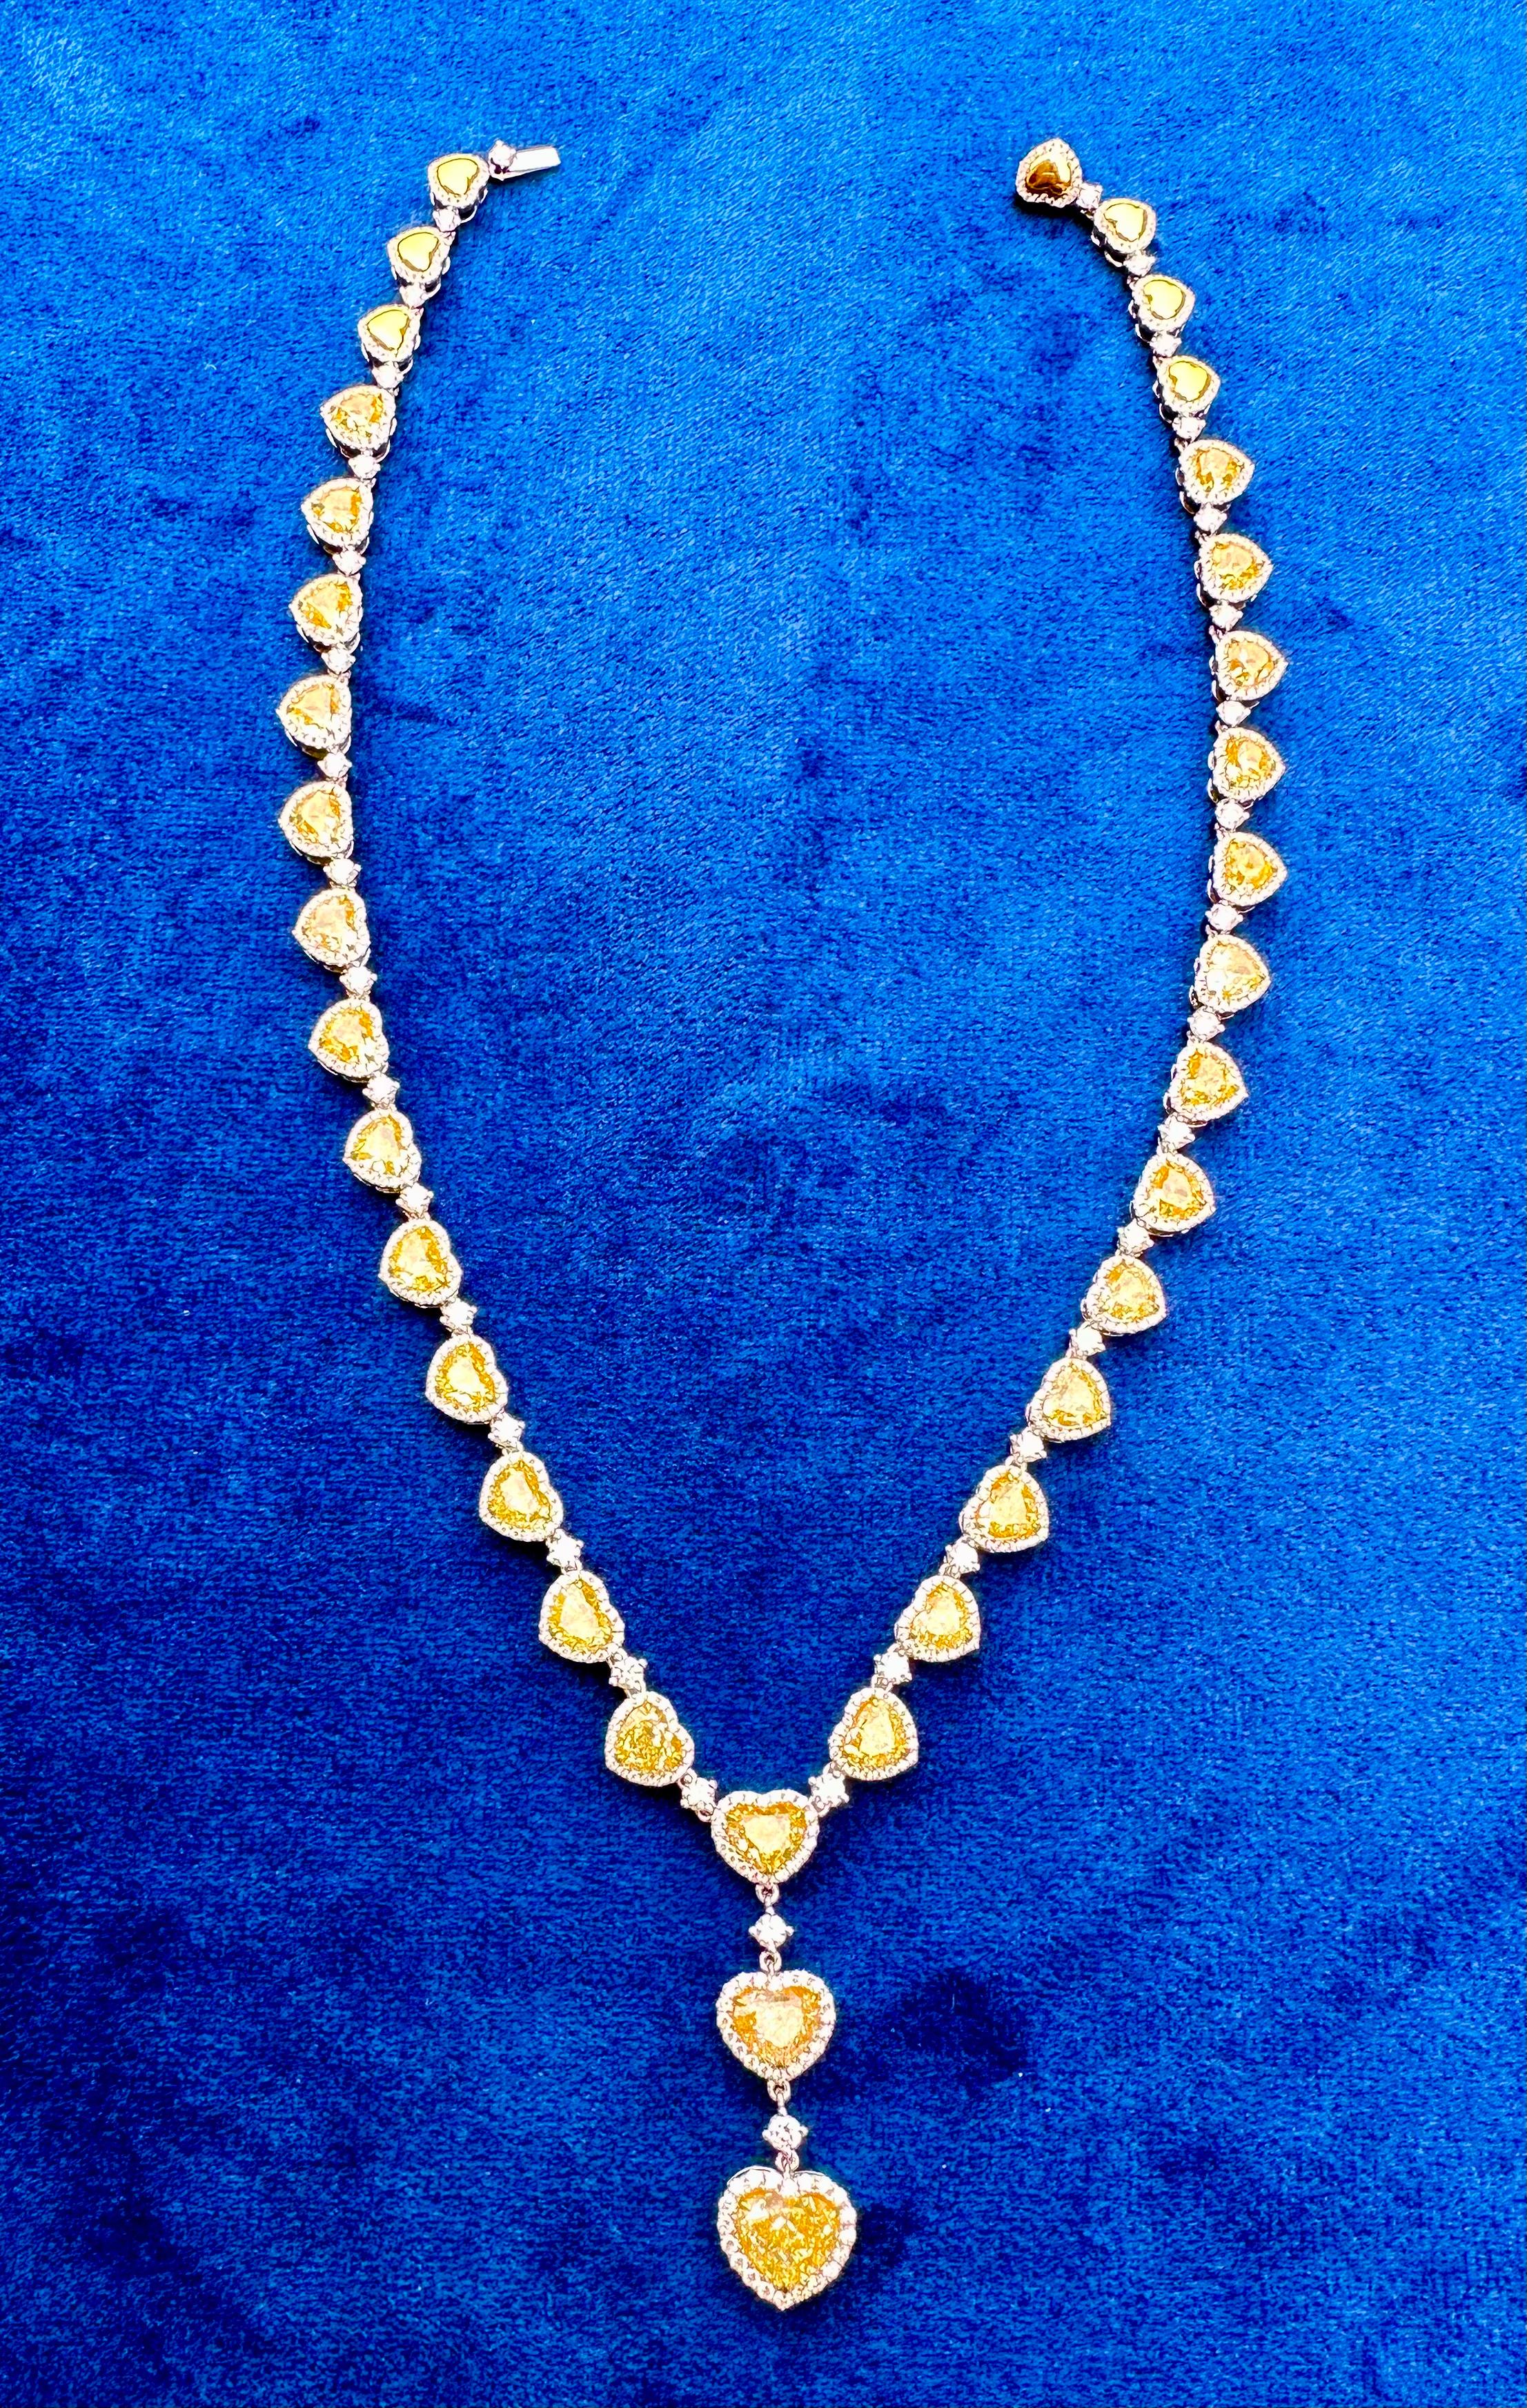 Women's Ladies 43.48 Carat Heart Brilliant All Solitaires Yellow Diamond Lariat Necklace